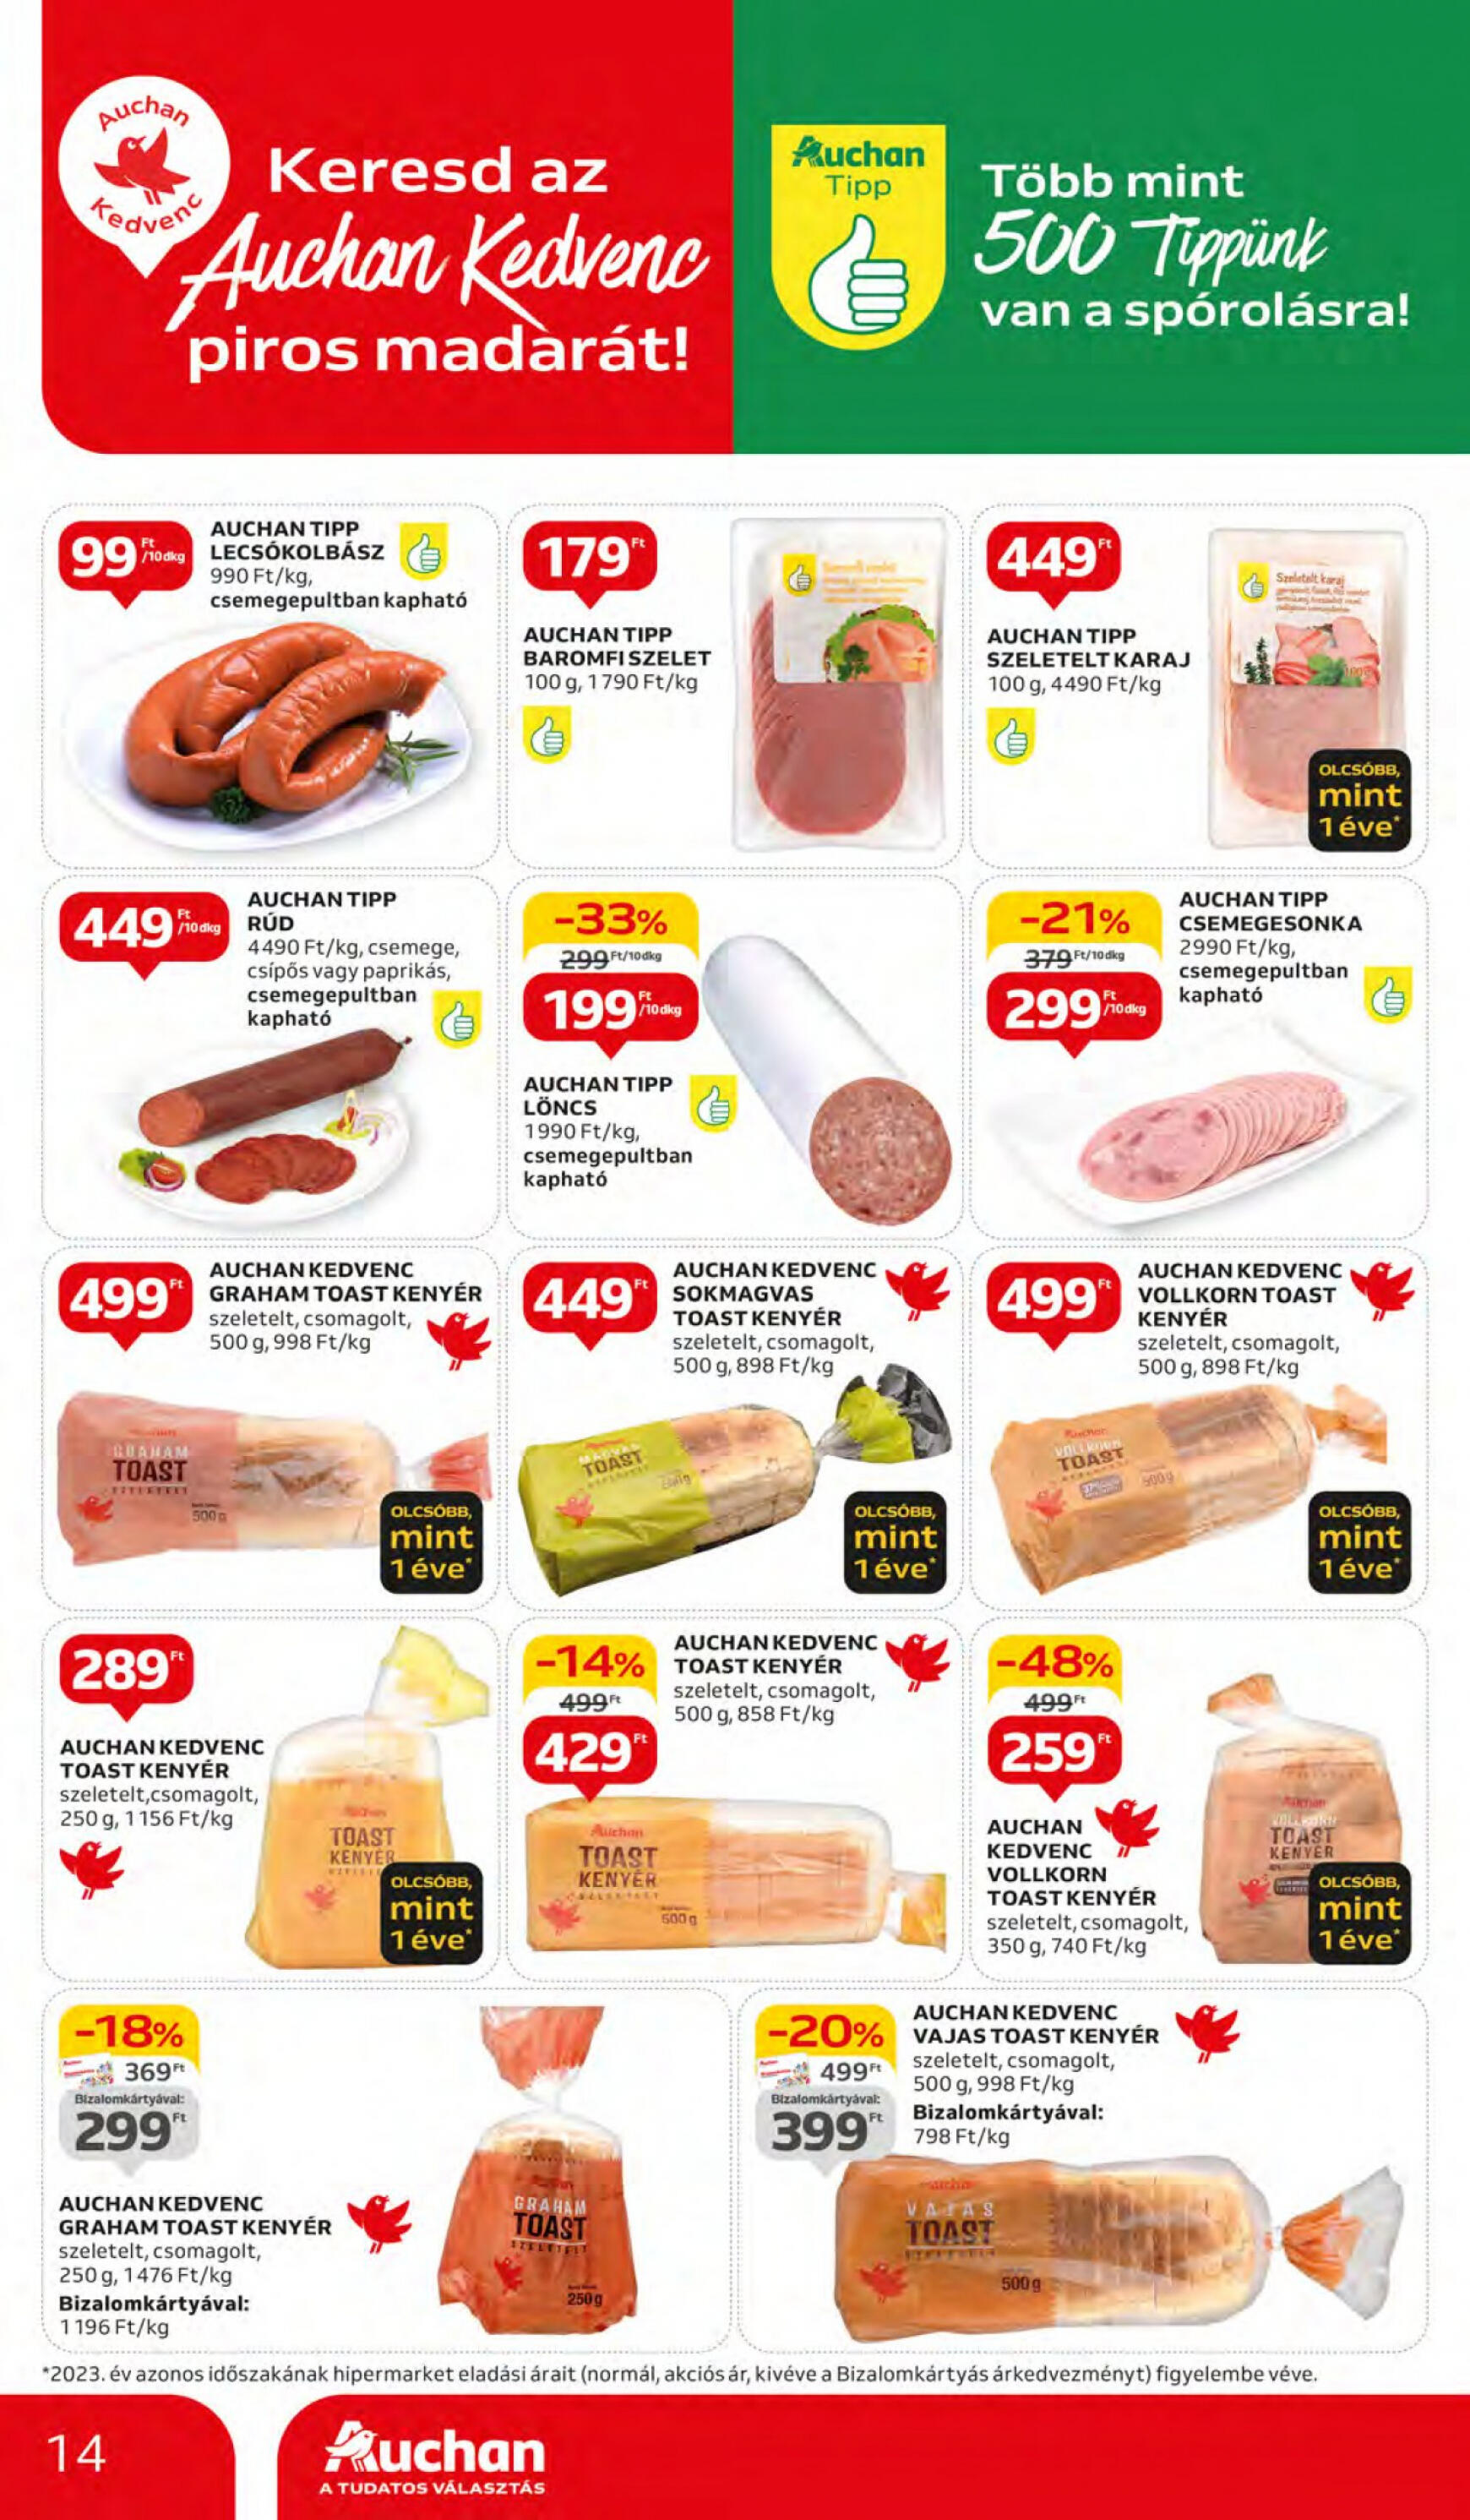 auchan - Aktuális újság Auchan 04.11. - 04.17. - page: 14